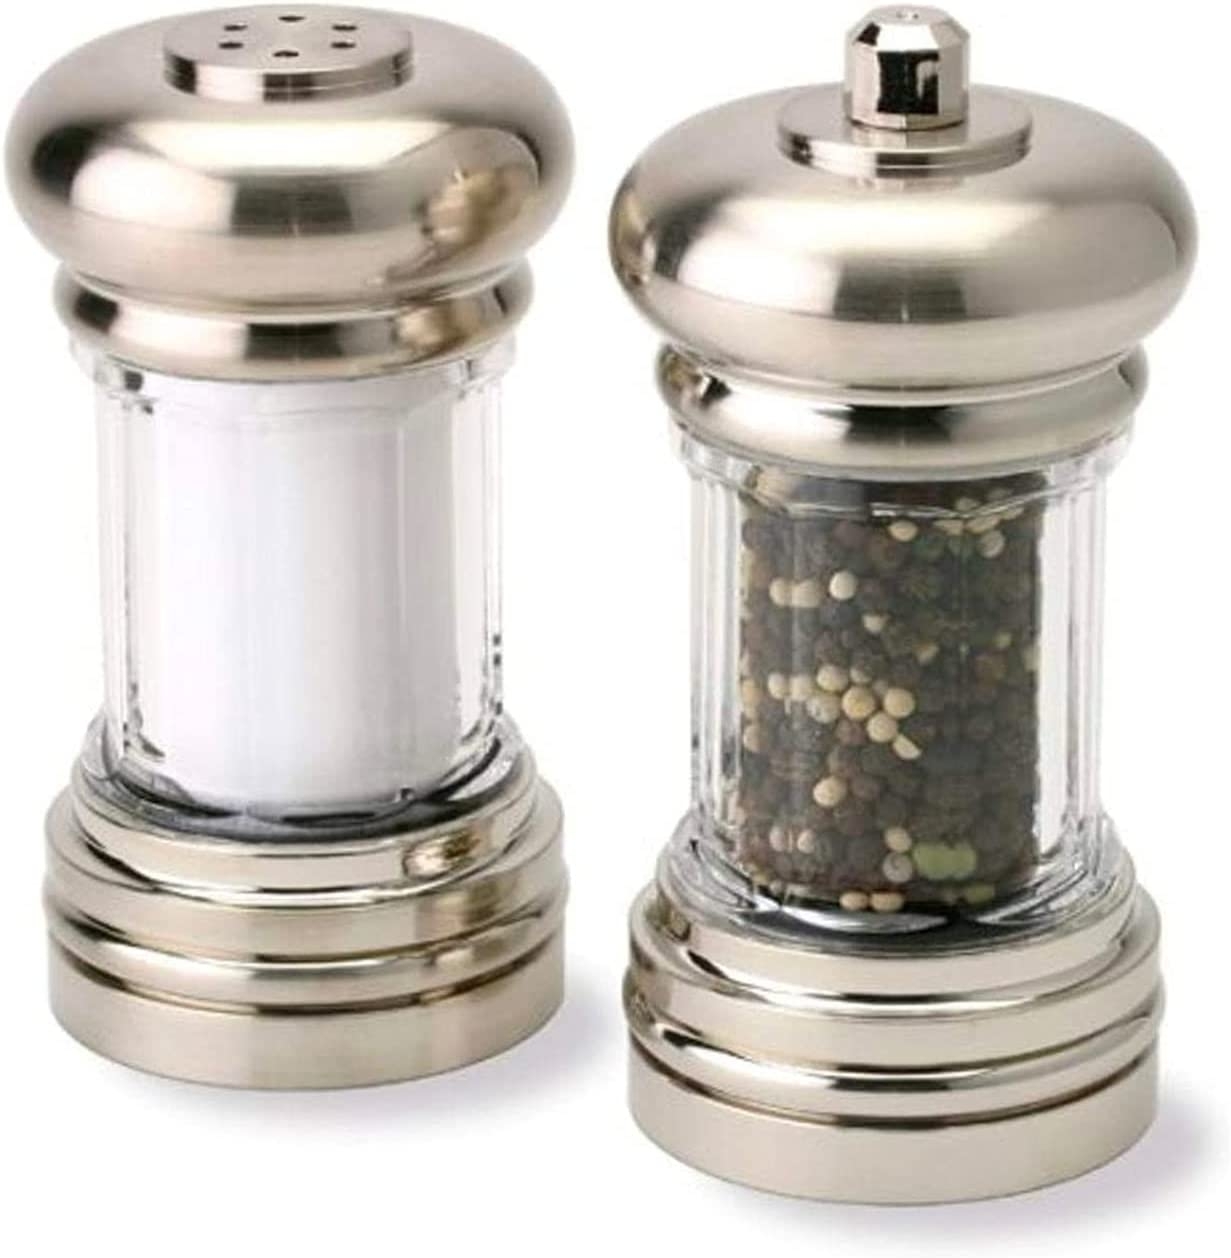 Olde Thompson Aspen – 5 Chrome Peppermill and Salt Grinder – Also Includes Bonus Pepper and Salt Refills, Fully Adjustable